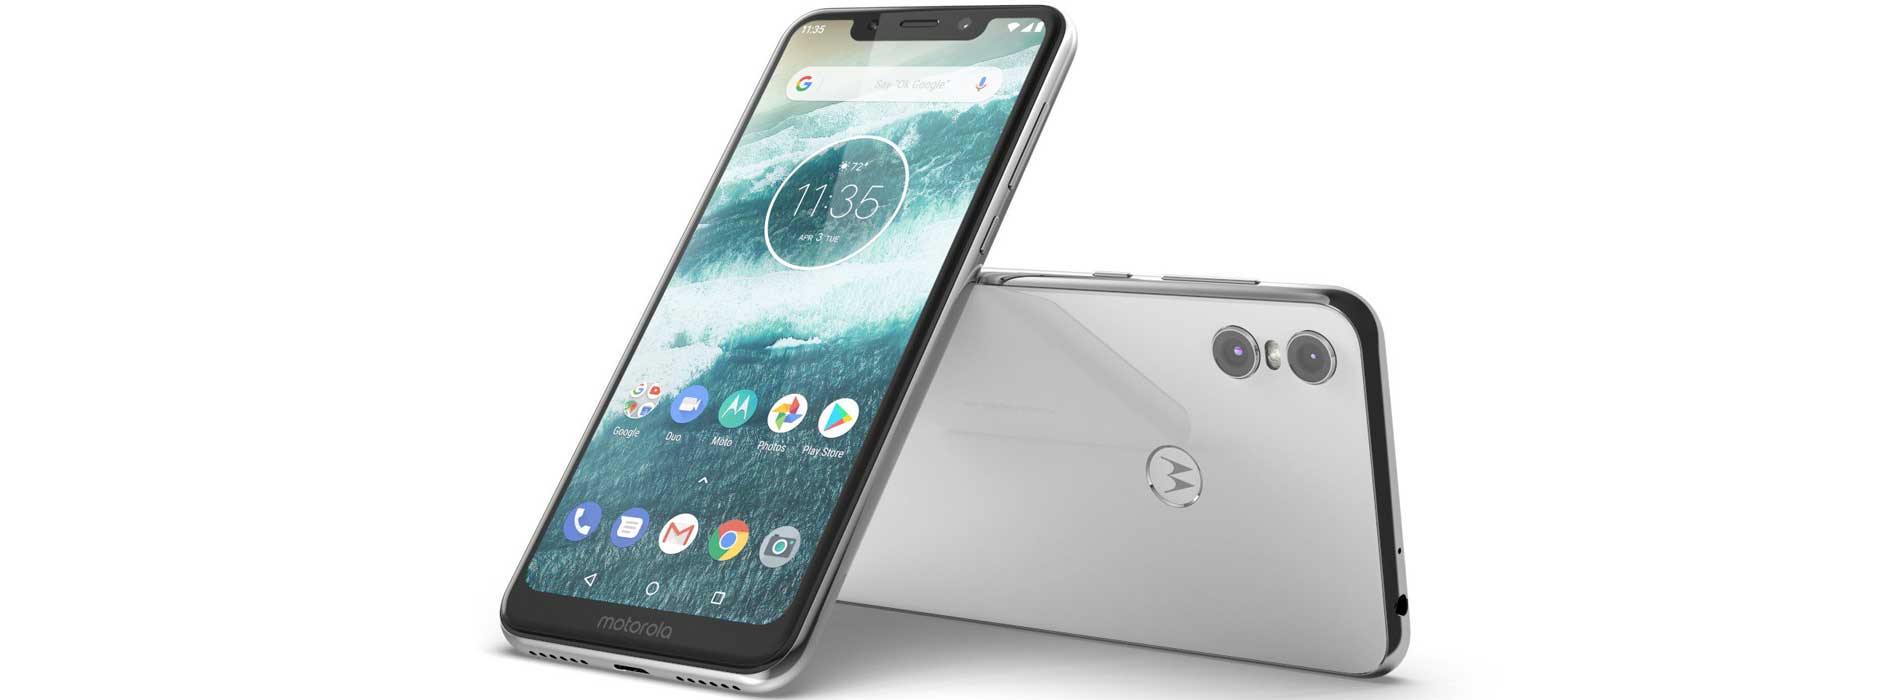 Análise: Motorola One - Vale a pena o smartphone com Android One?